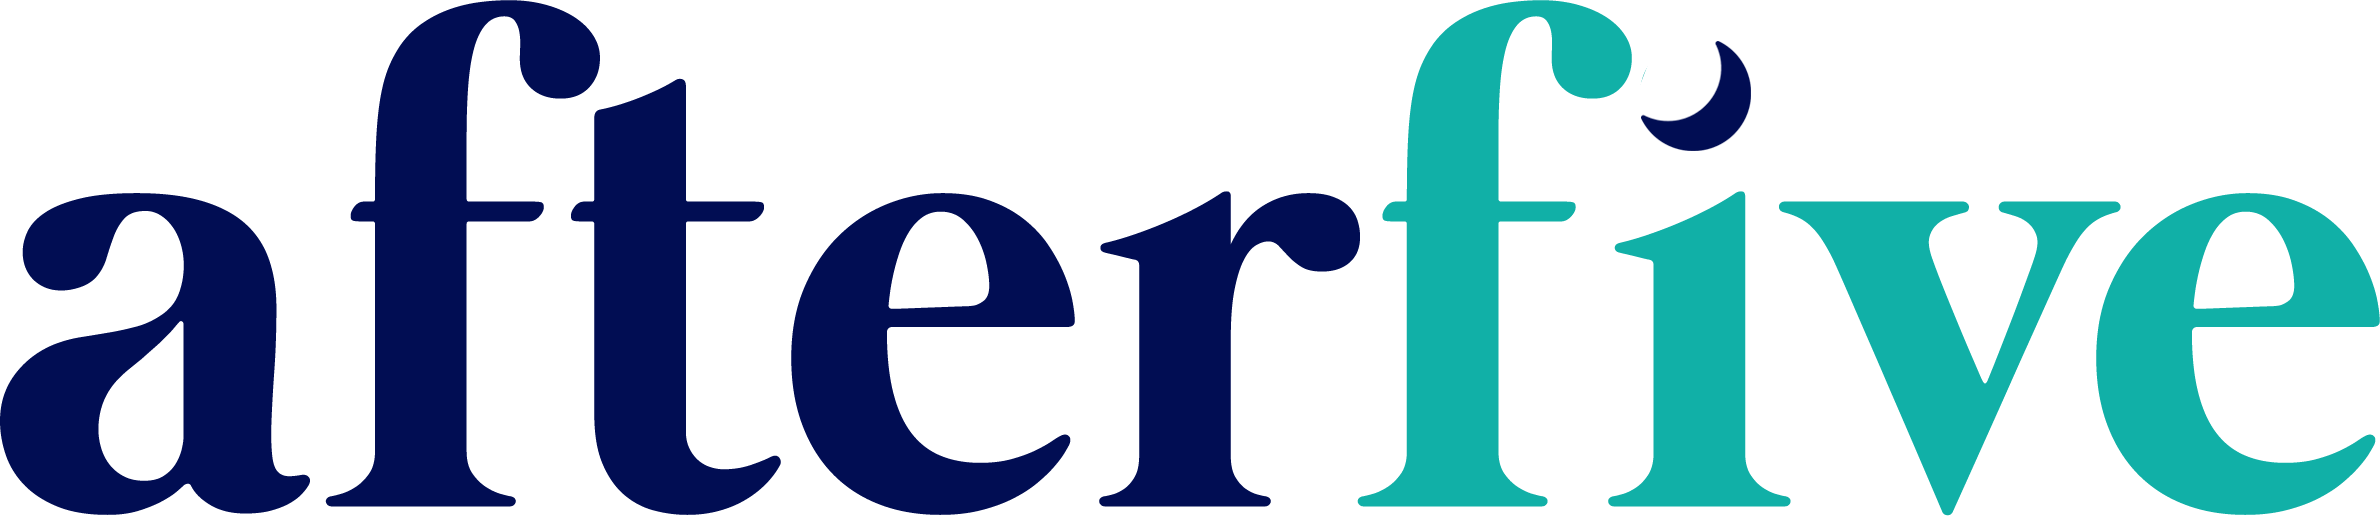 footer-color-logo